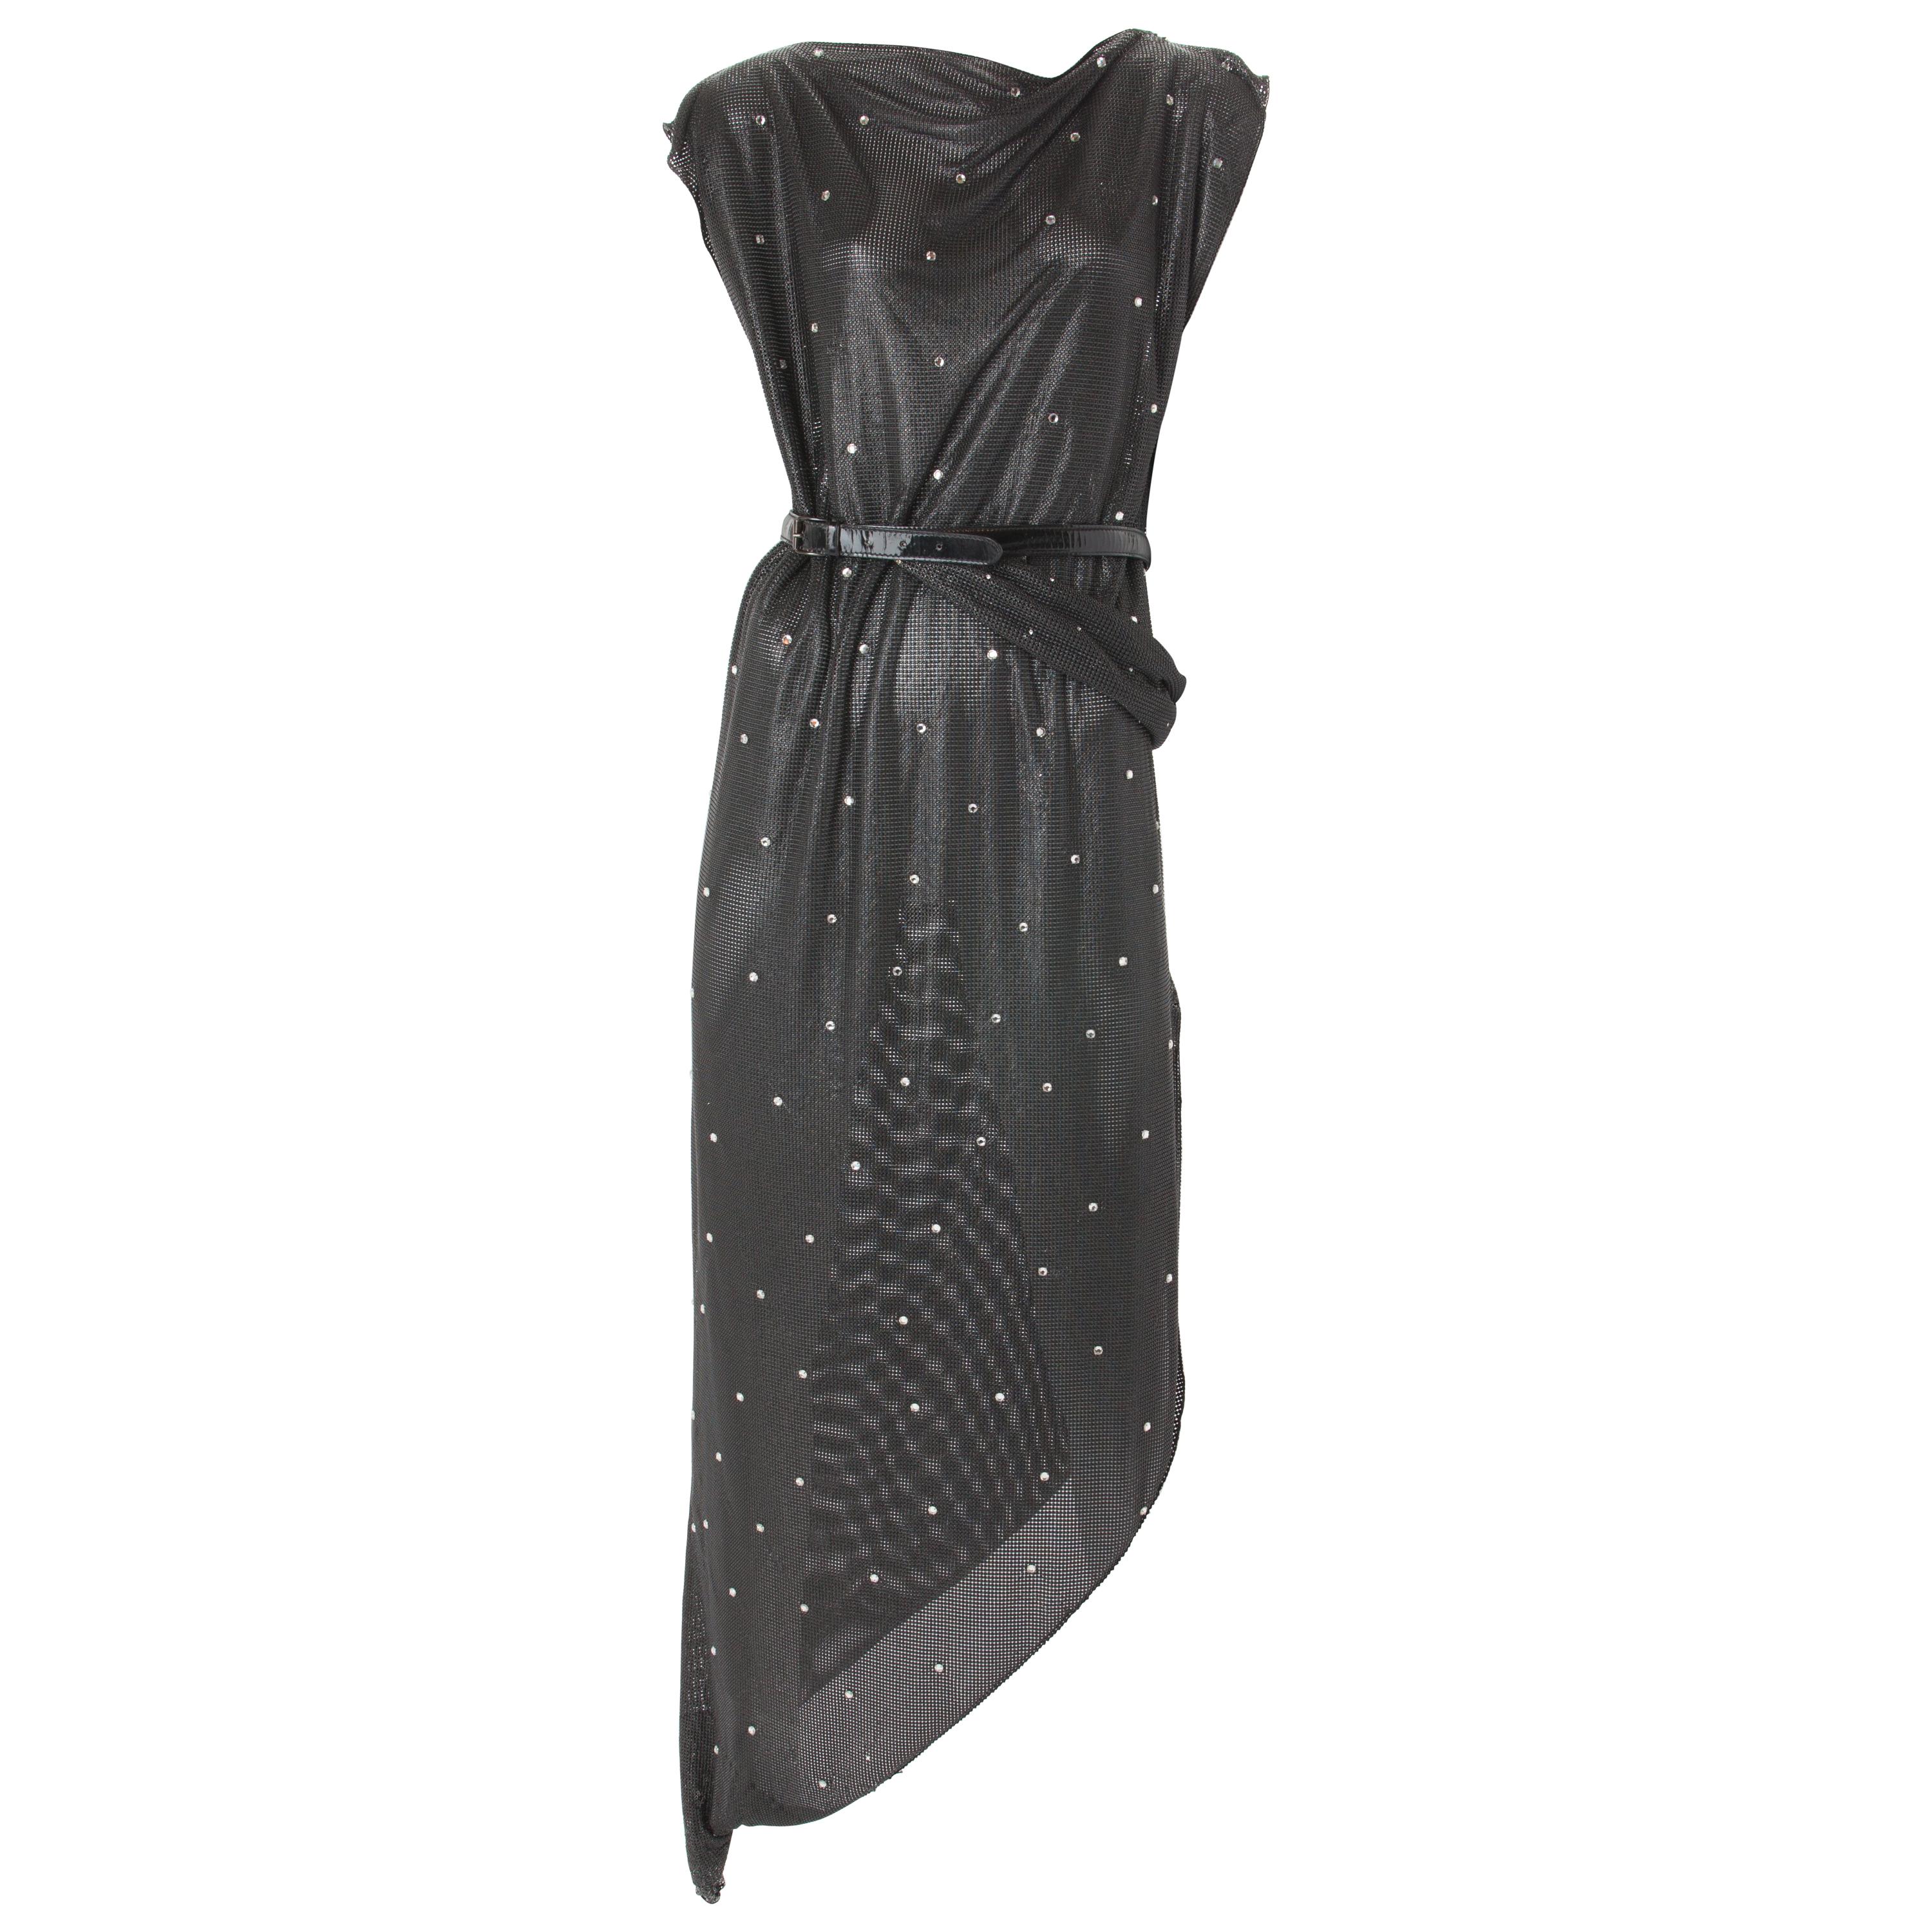 Gianni Versace Oroton Dress with Rhinestone Embellishment and Belt, c.1990s.